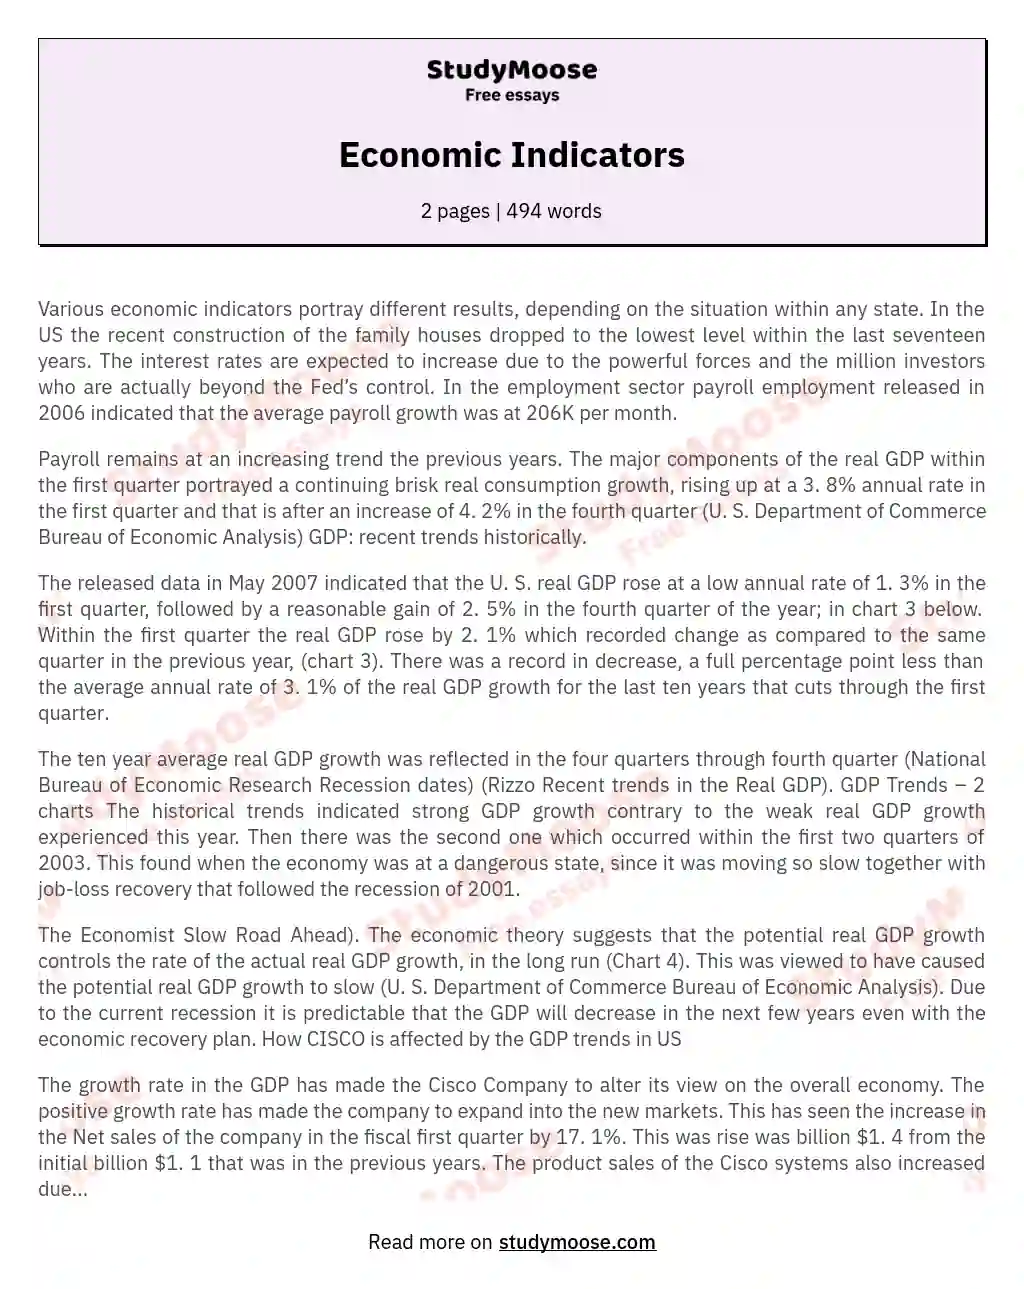 Economic Indicators essay